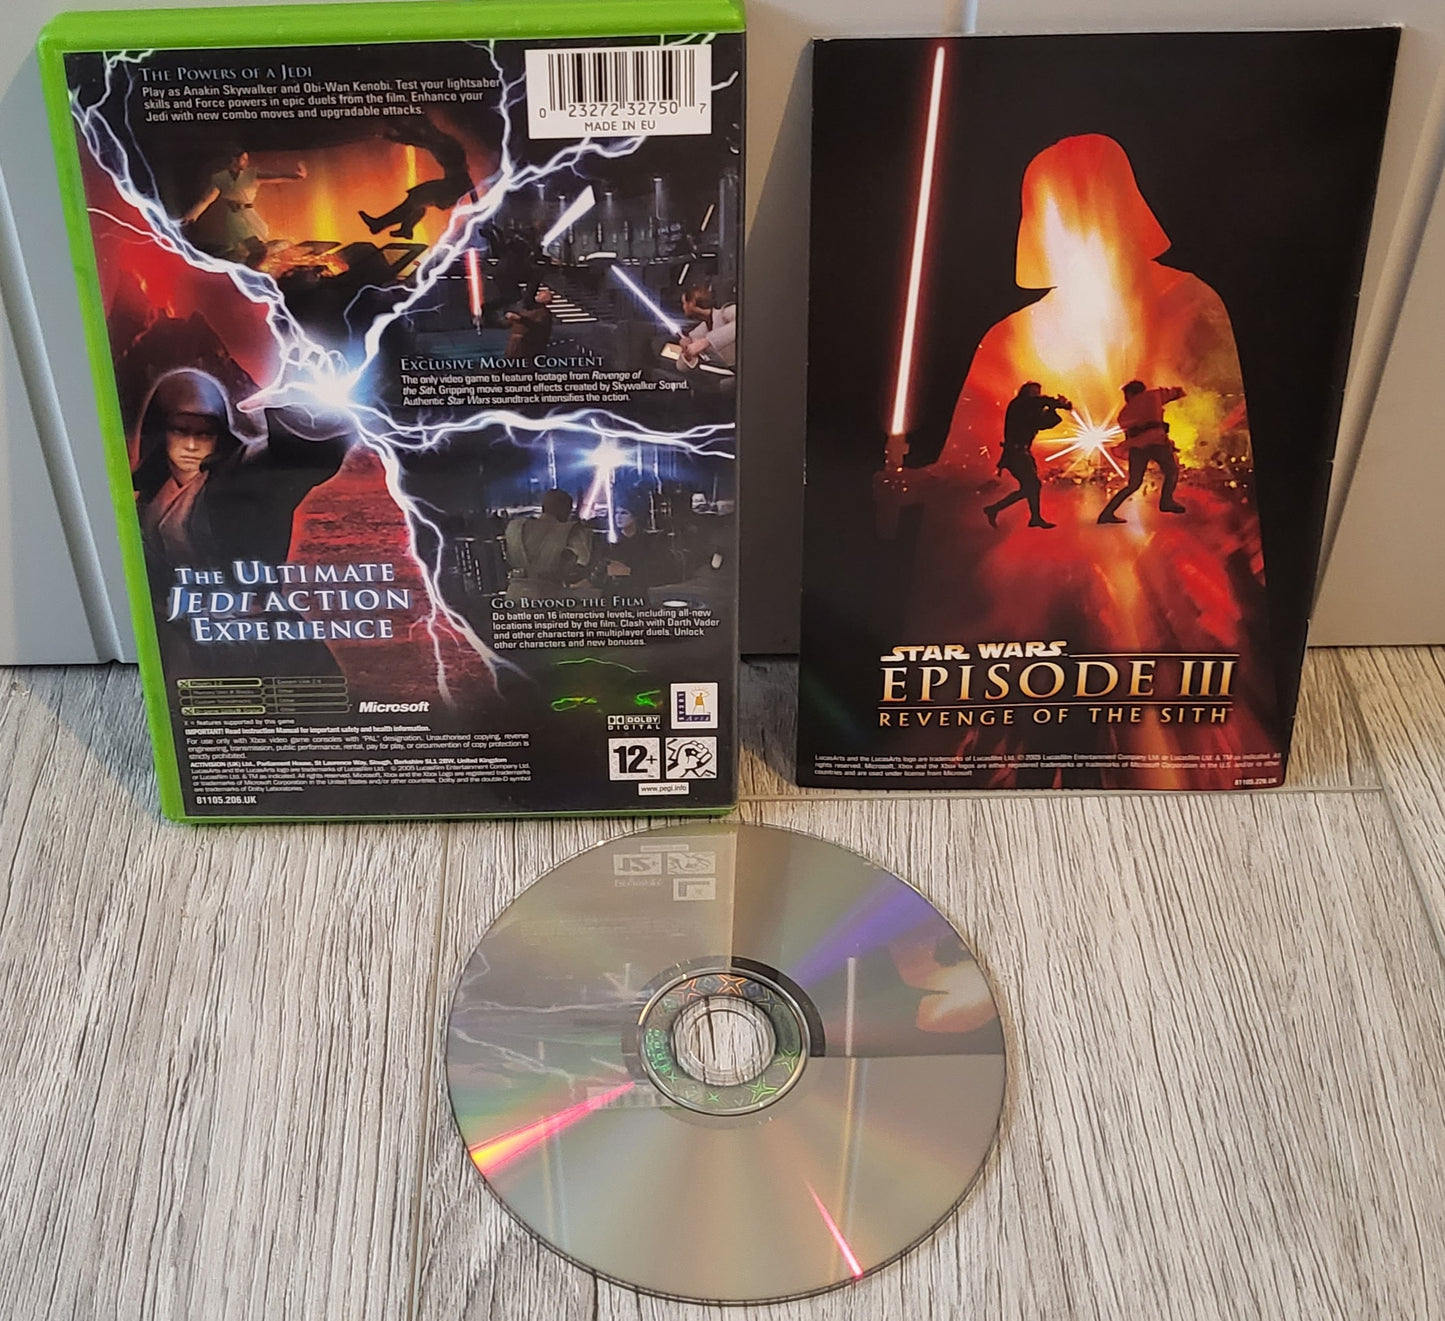 Star Wars Episode III Revenge of the Sith Microsoft Xbox Game